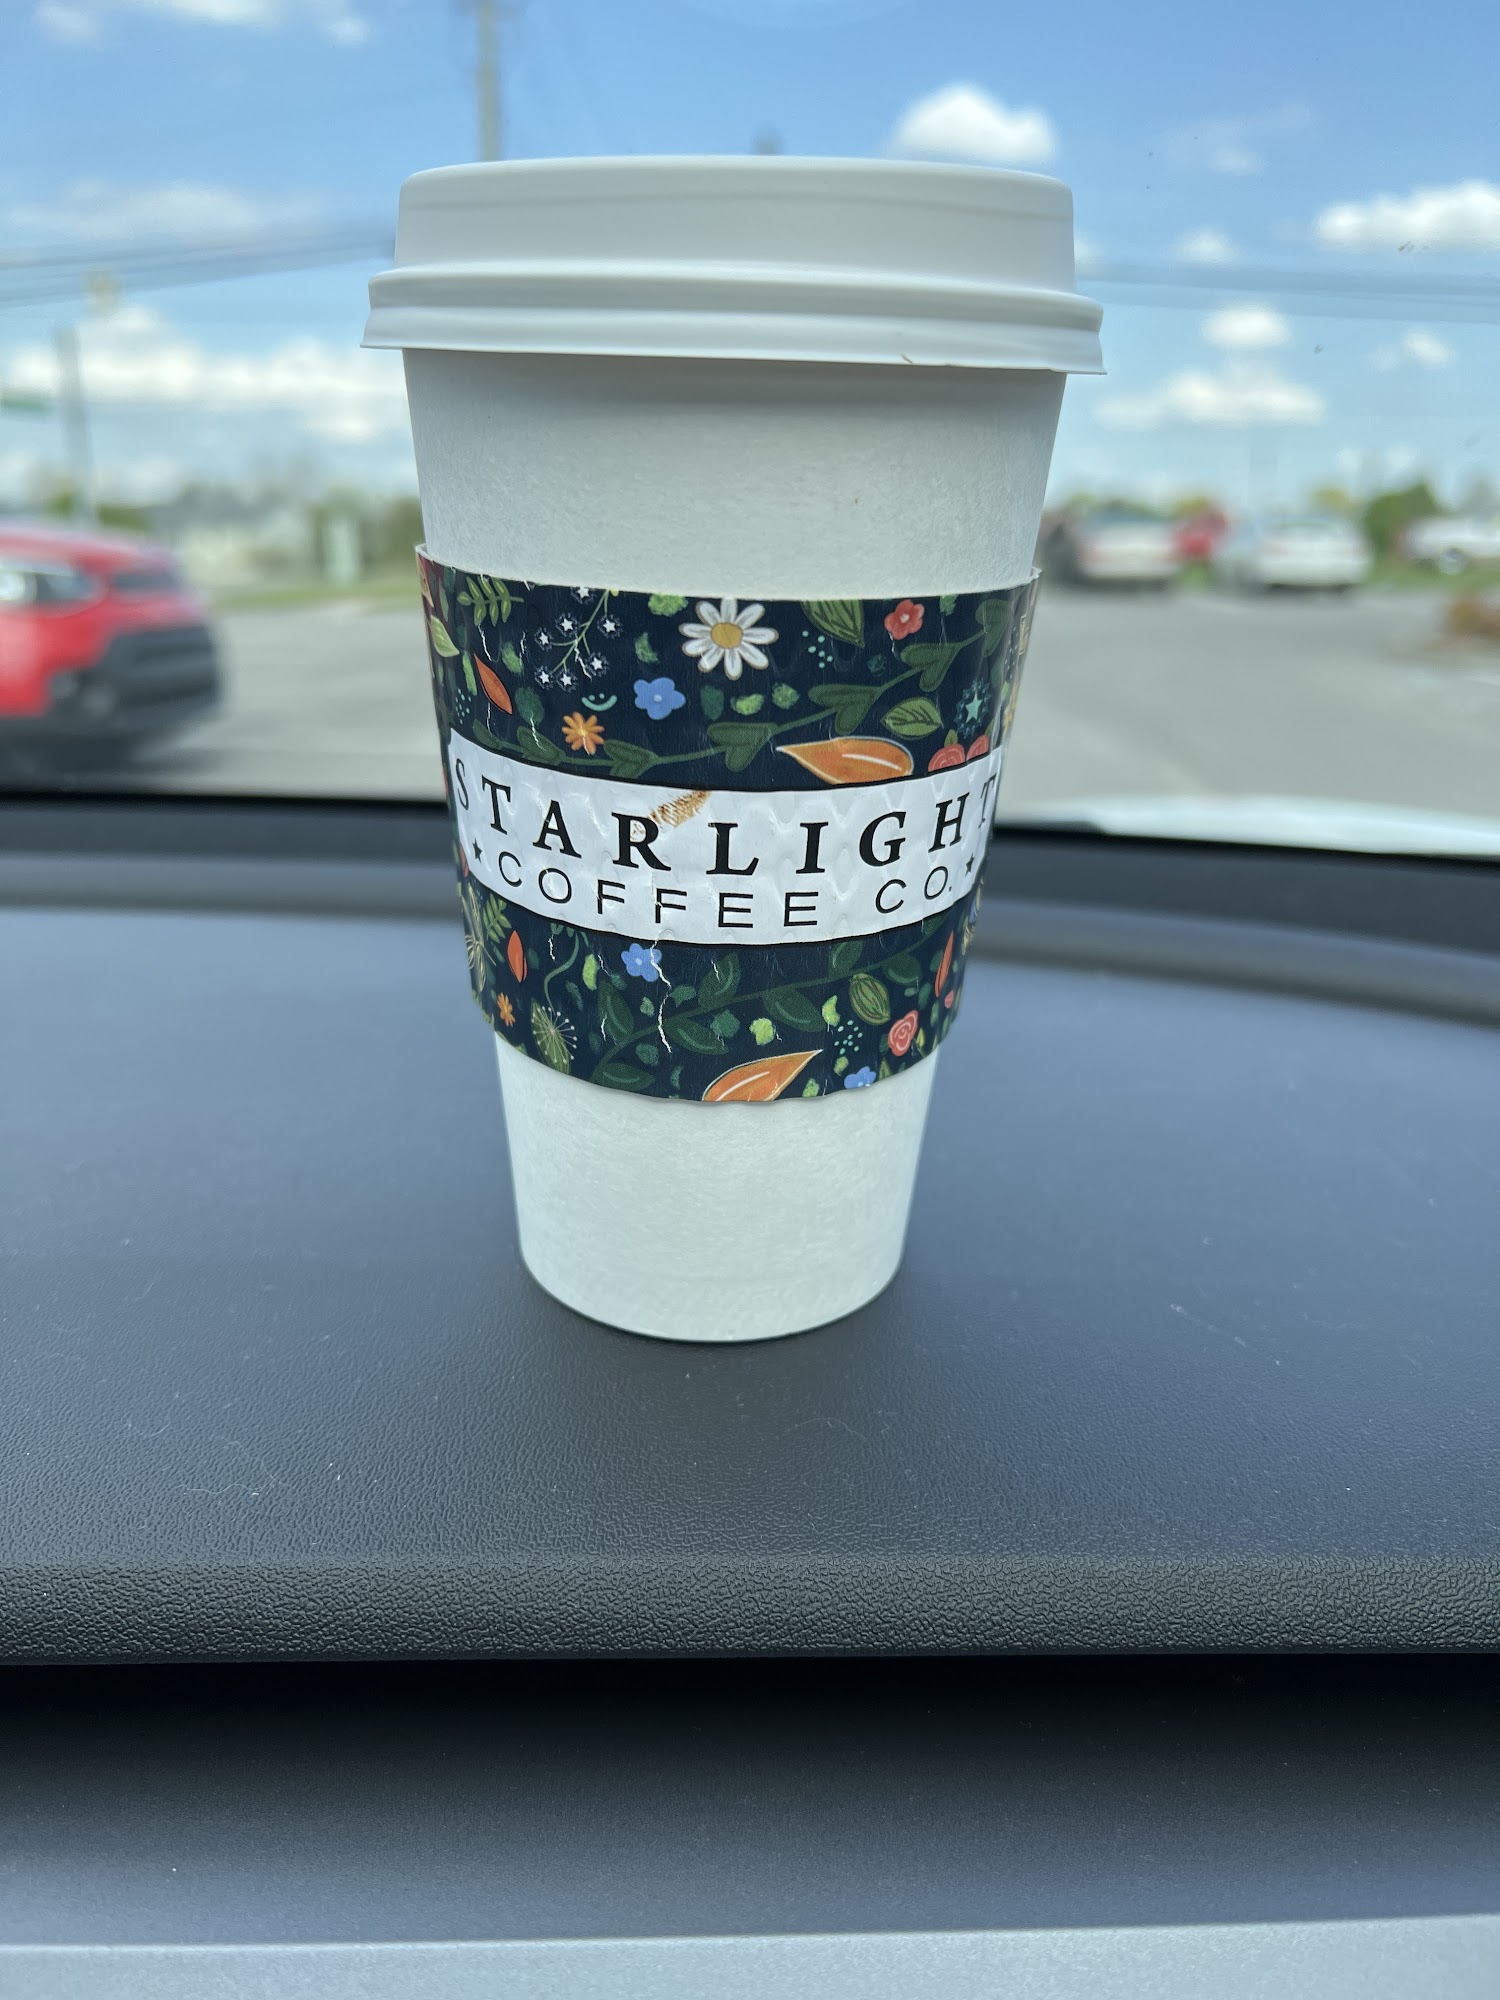 Starlight Coffee Co.